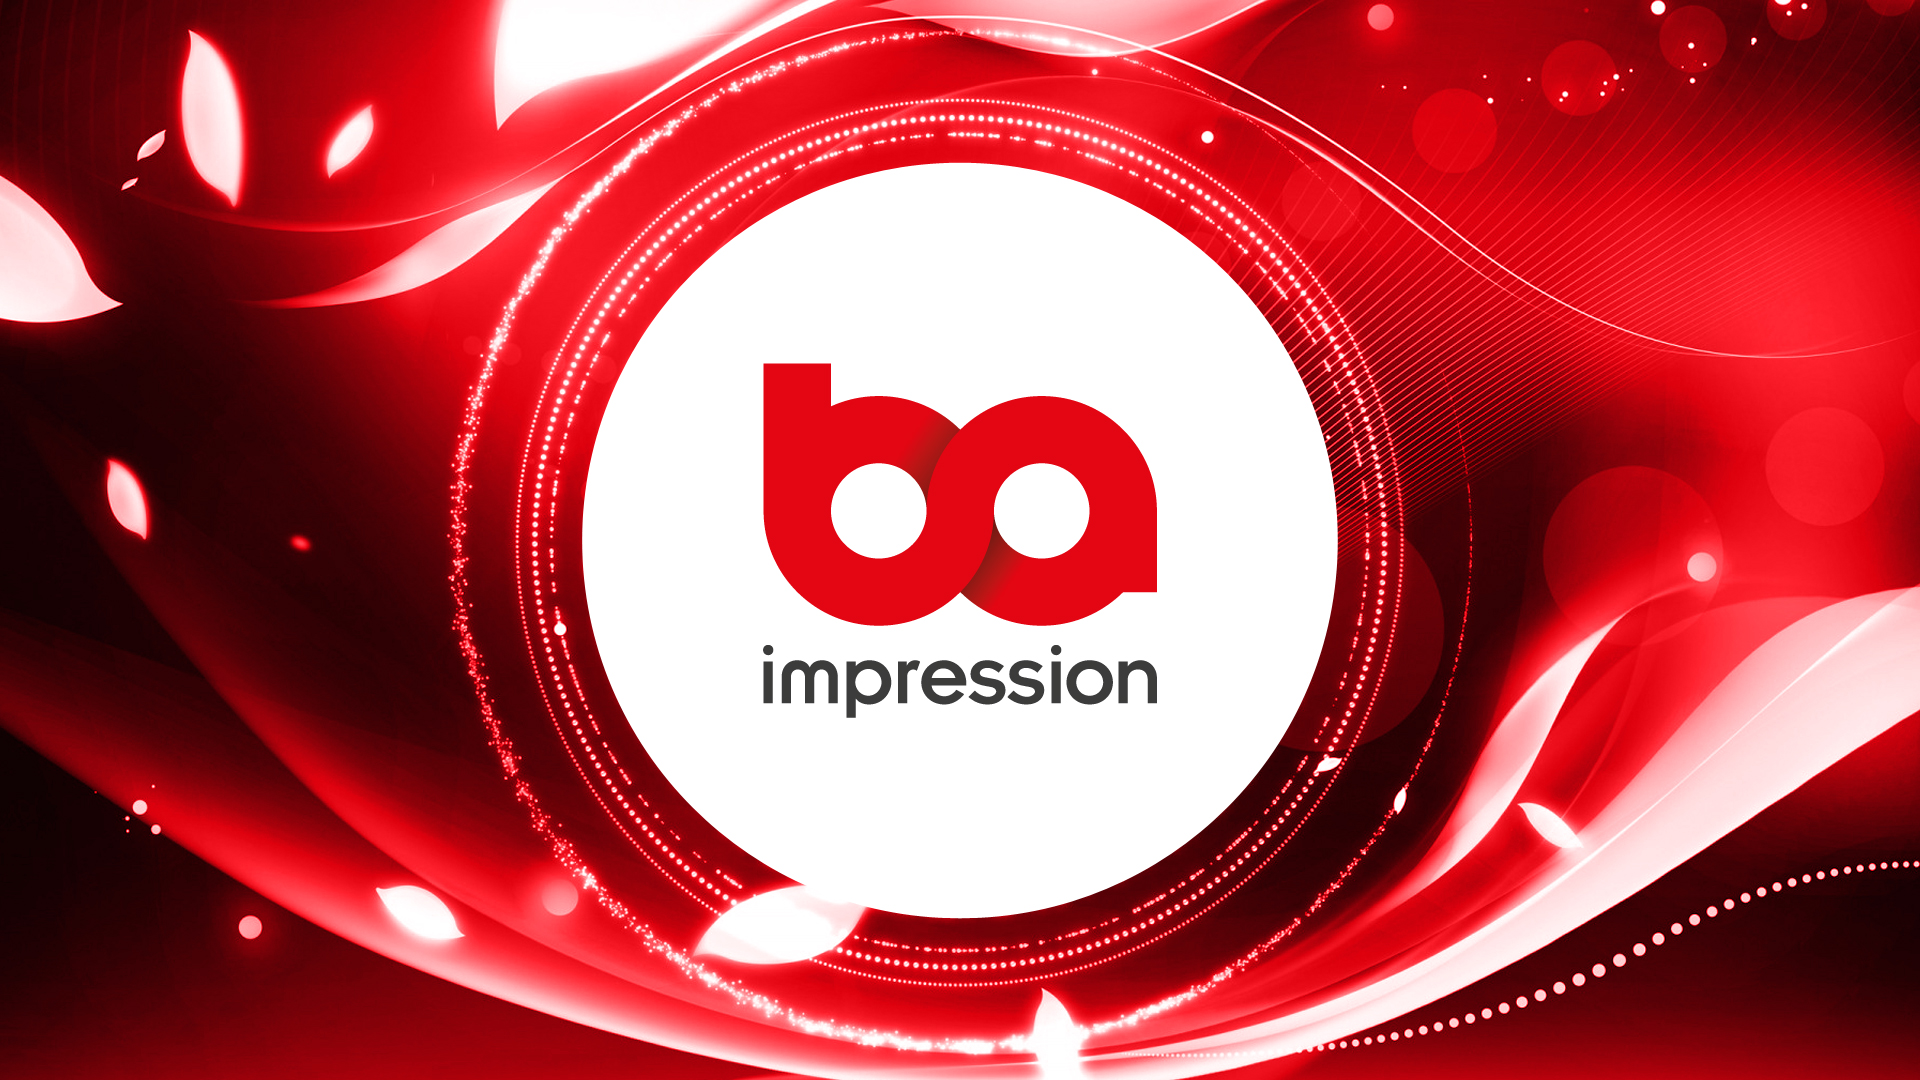 ba-impression-creation-logo-papeterie-caconcept-alexis-cretin-graphiste-montpellier